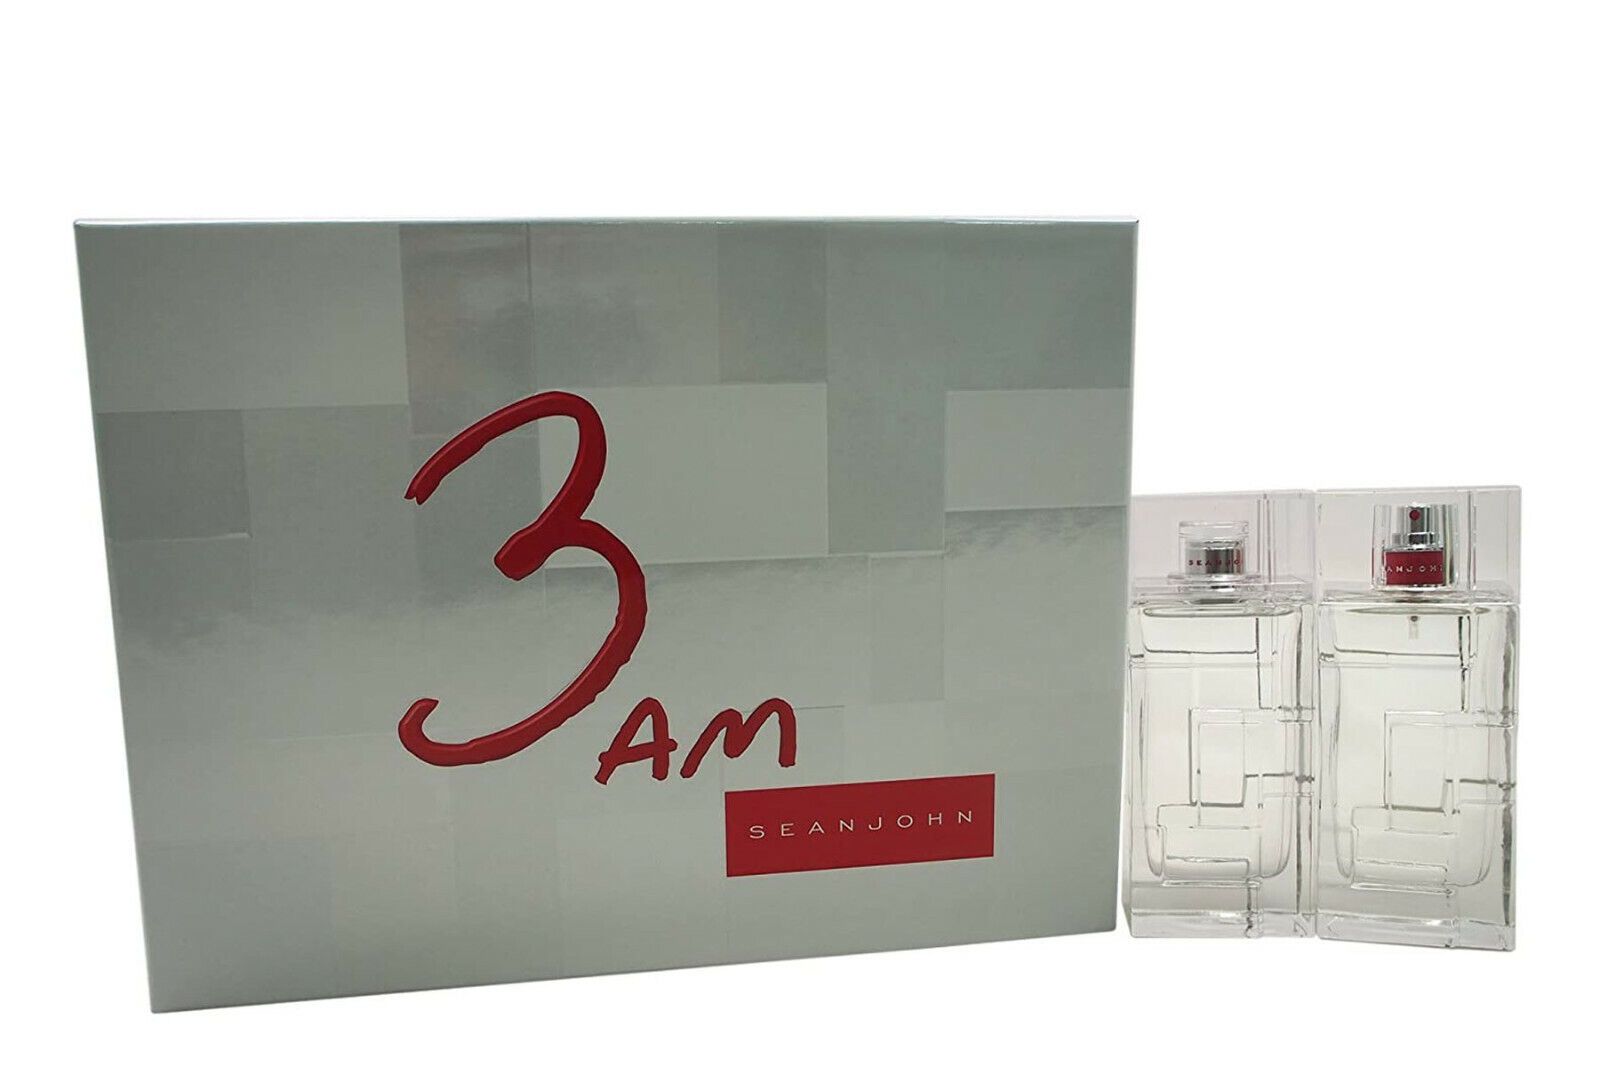 Sean John 3 Am 2 Piece Perfume Gift Set for Men at Ratans Online Shop - Perfumes Wholesale and Retailer Fragrance